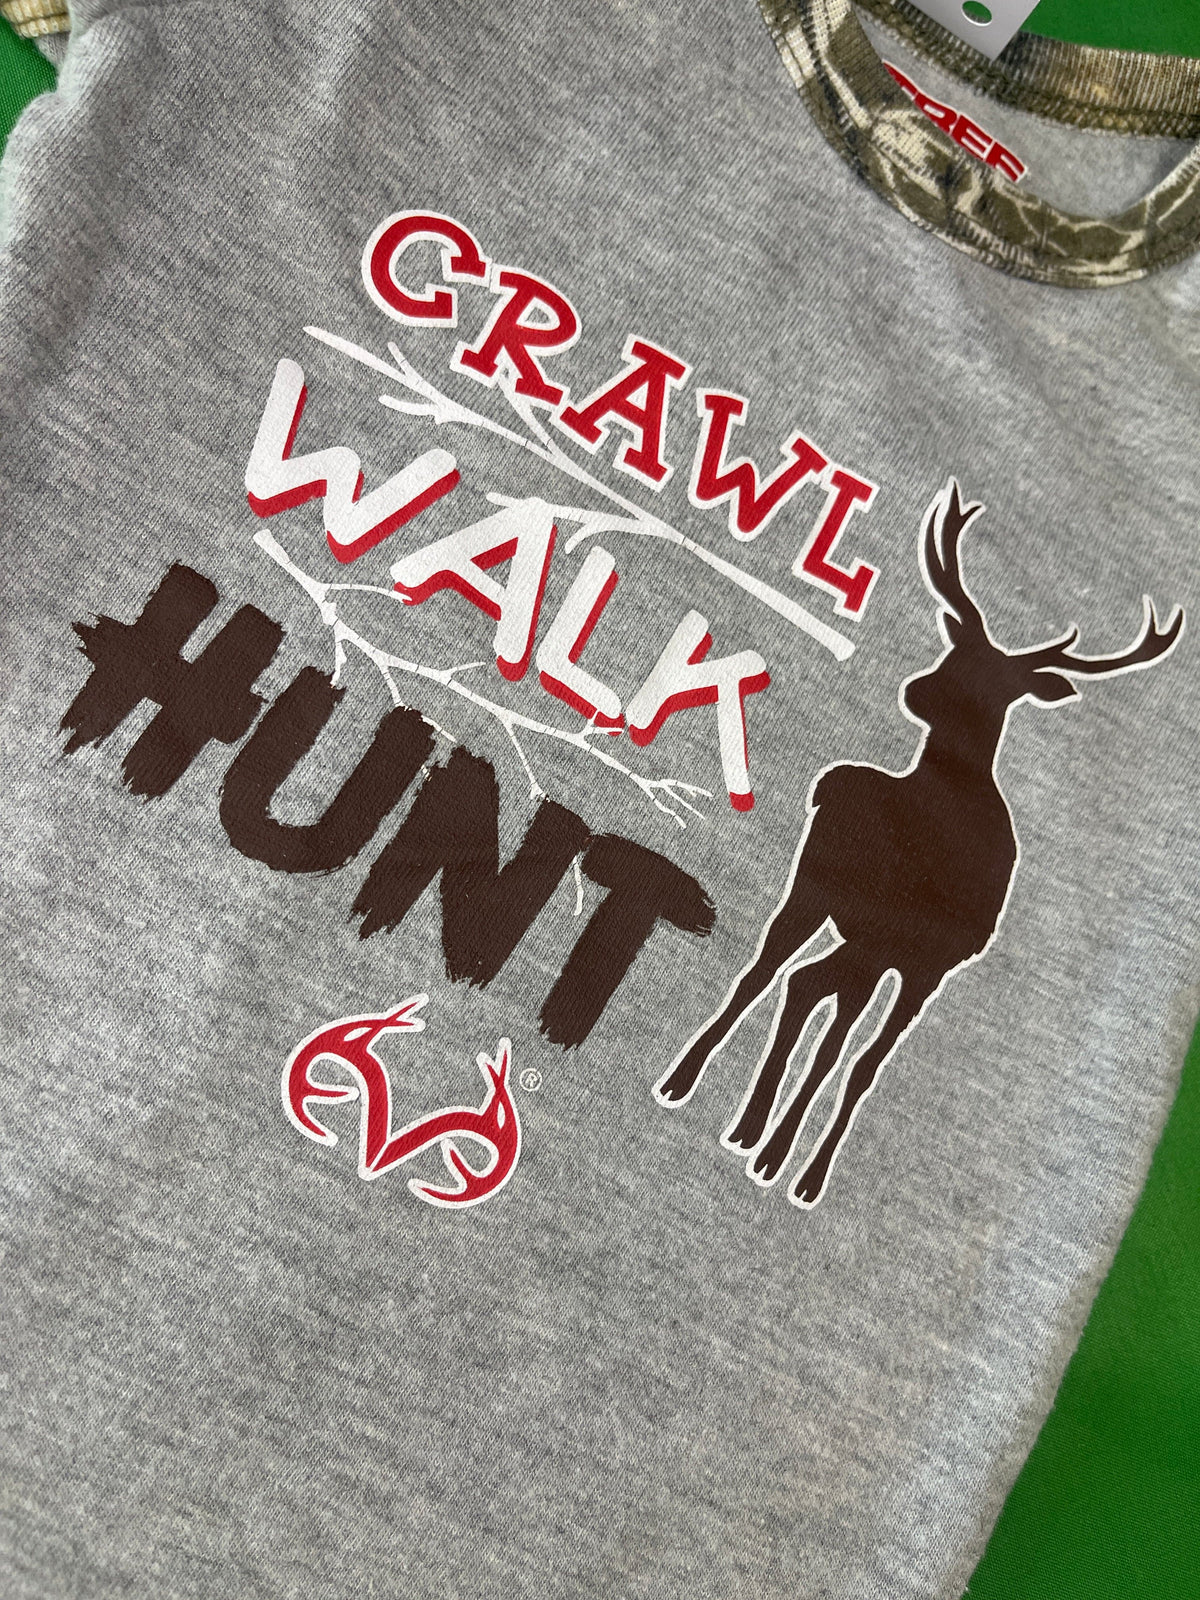 Realtree Camo 'Crawl Walk Hunt' Baby Bodysuit/Vest 3-6 Months